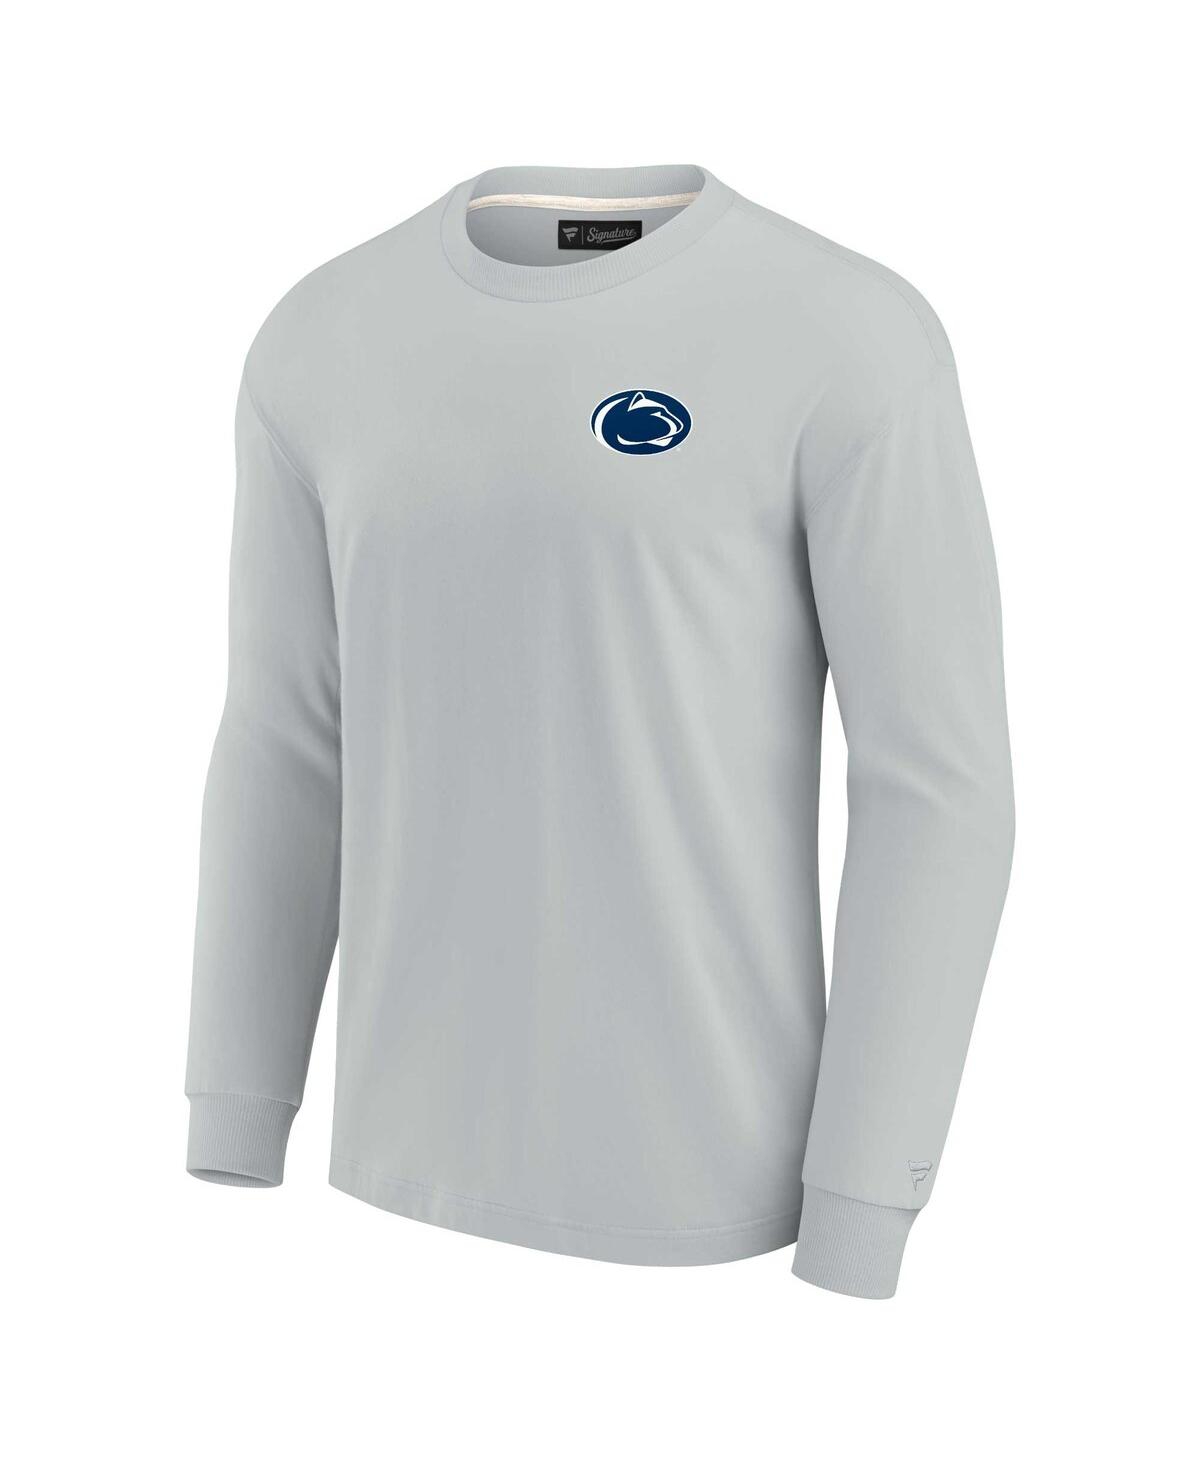 Shop Fanatics Signature Men's And Women's  Gray Penn State Nittany Lions Super Soft Long Sleeve T-shirt